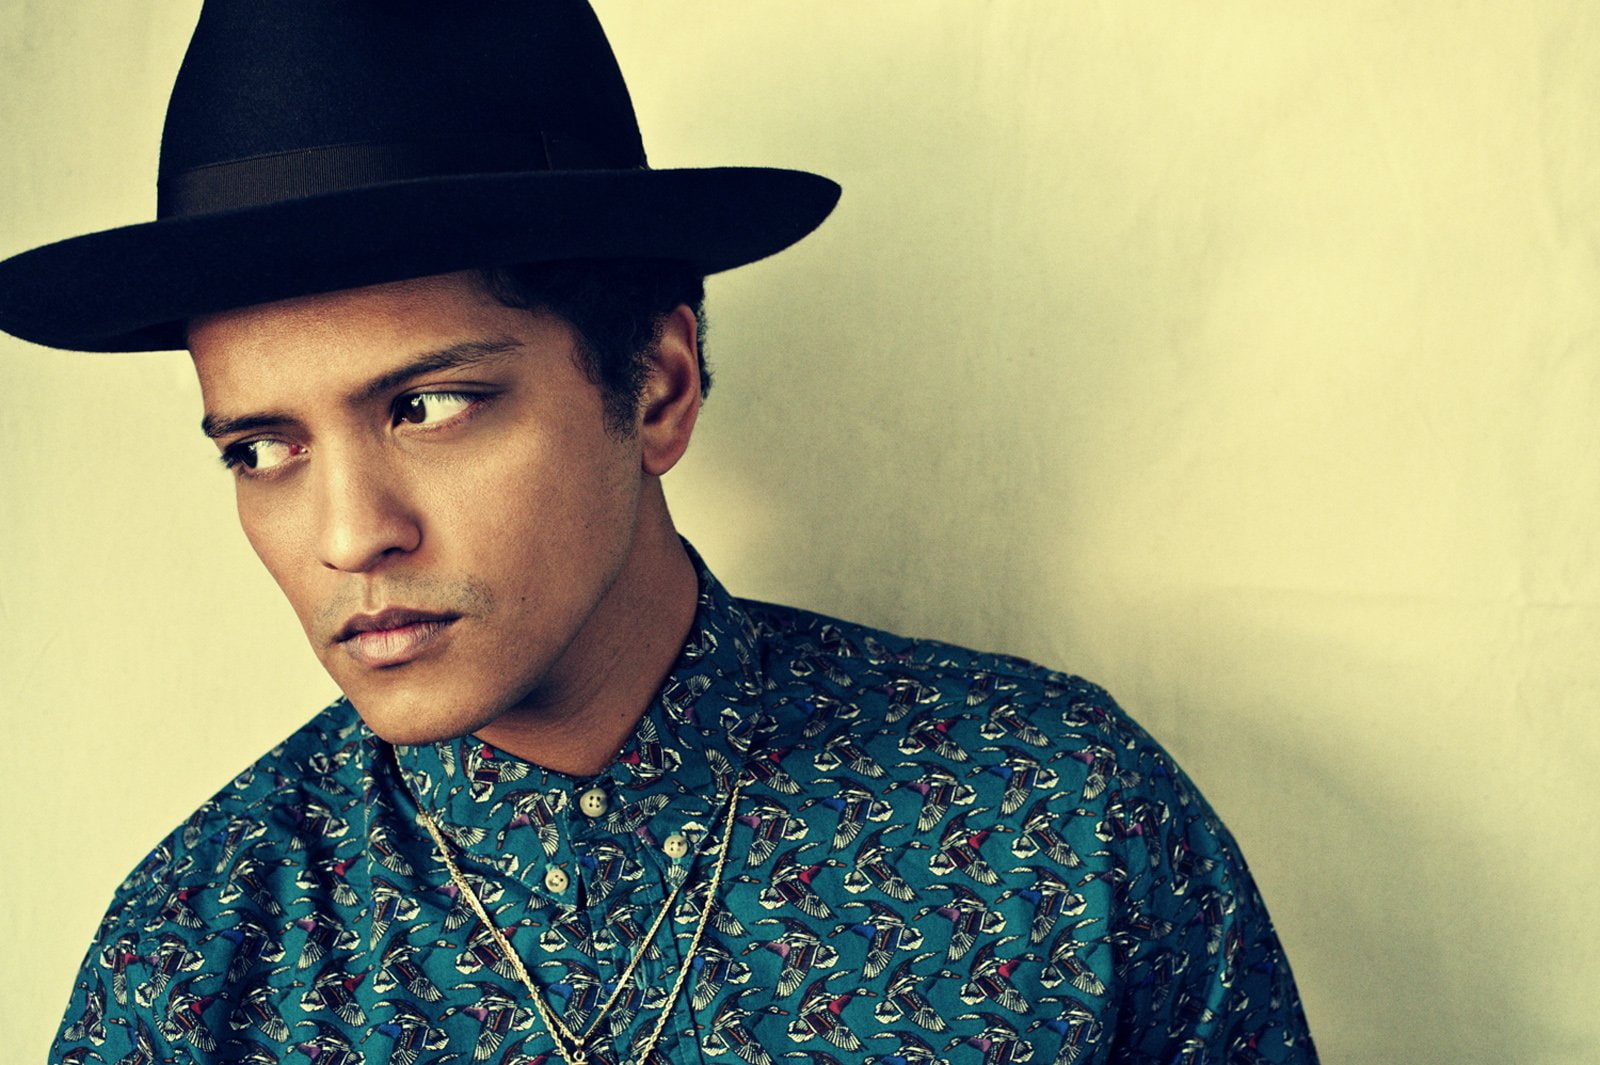 Singers, Bruno Mars, hat, portrait, clothing, headshot, one person